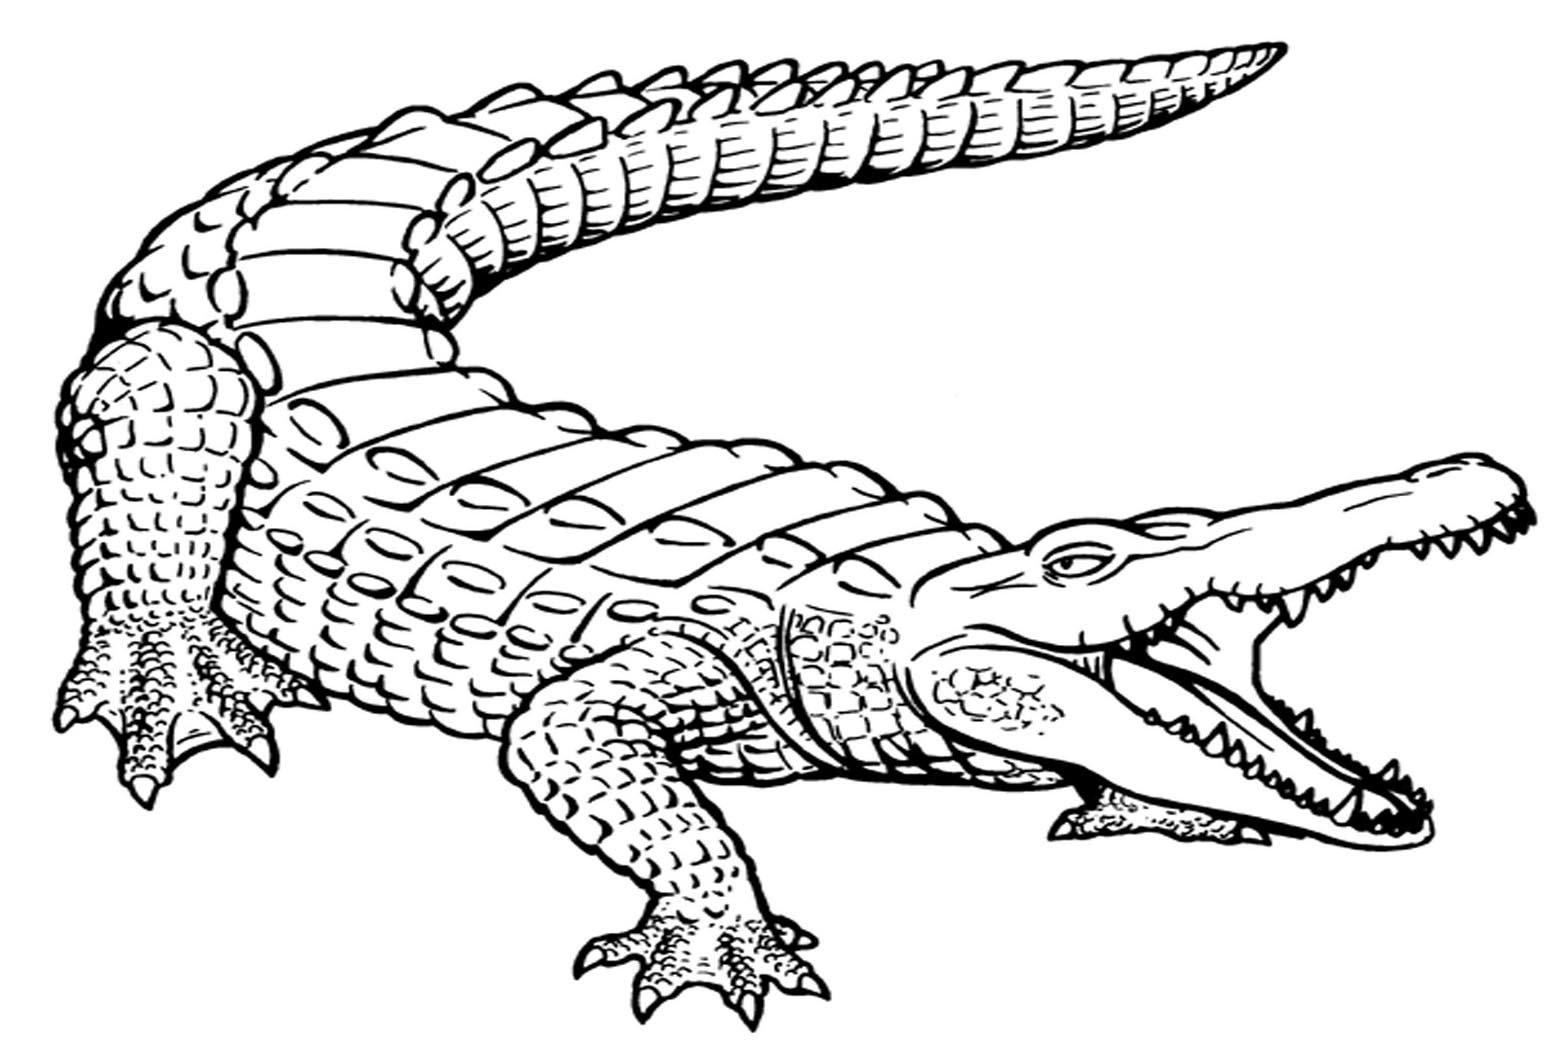 Coloring page elegant combed crocodile